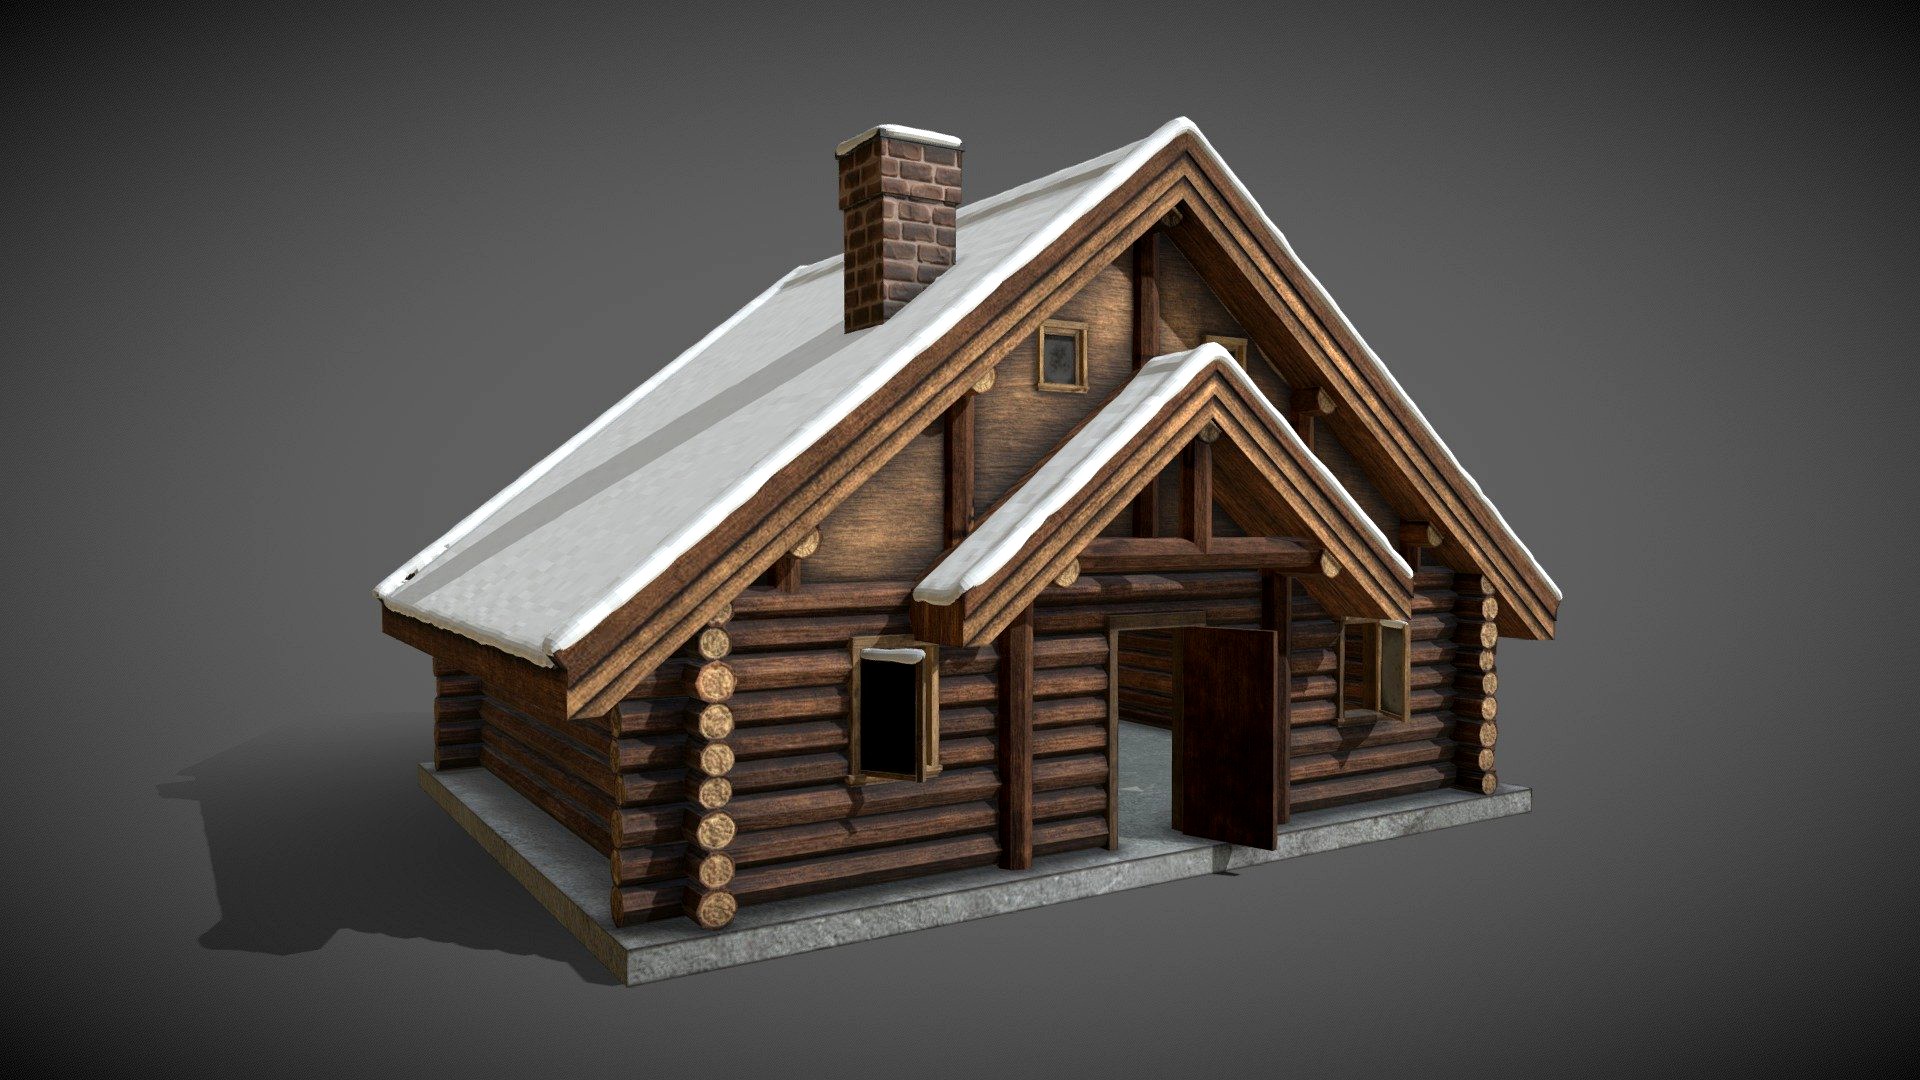 Snowed wood cabin house